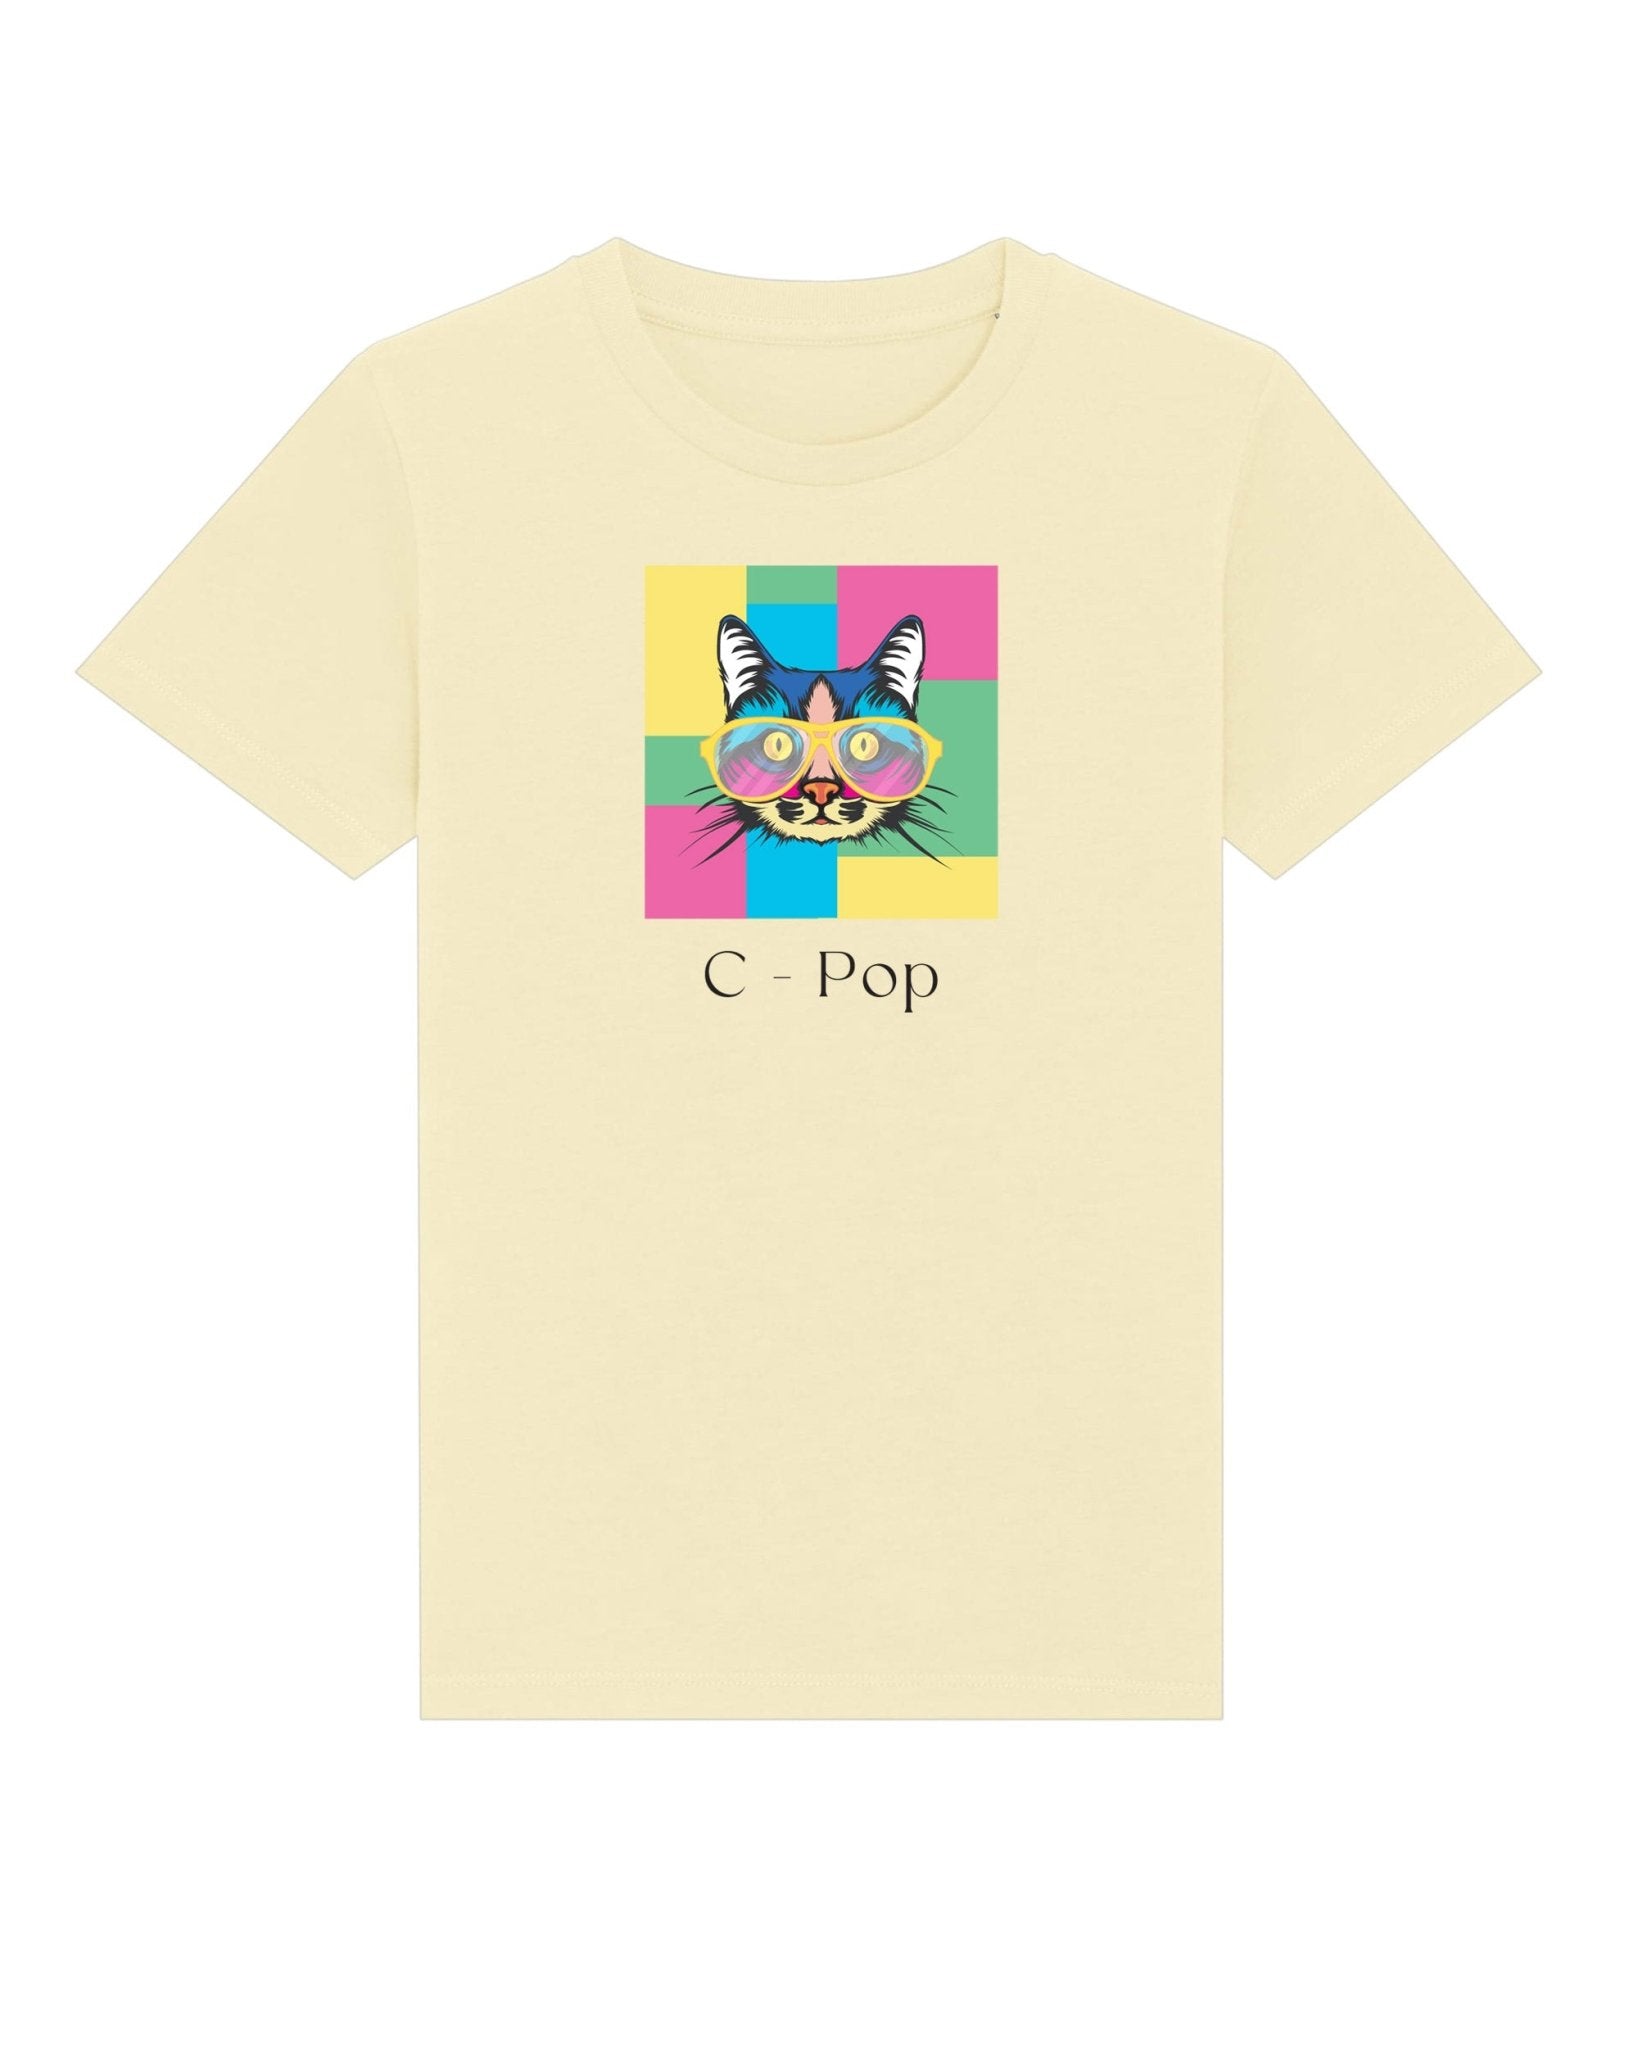 Organic Cotton 'C-Pop' Kids Funny Cat T-shirt - Funny Animal Shirt